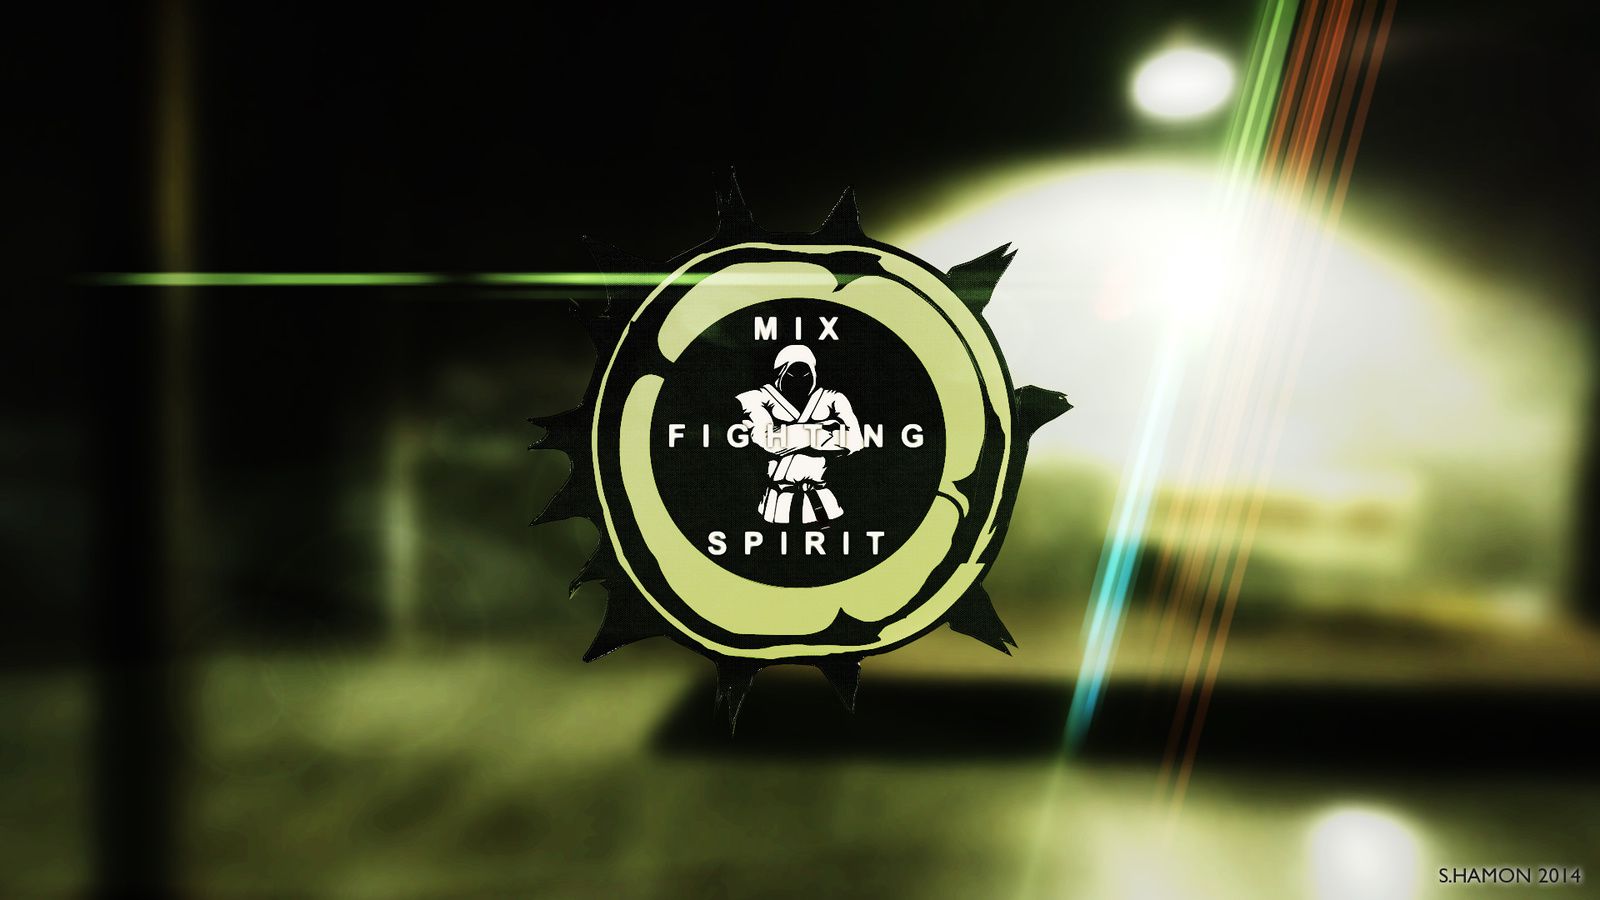 Mix Fighting Spirit